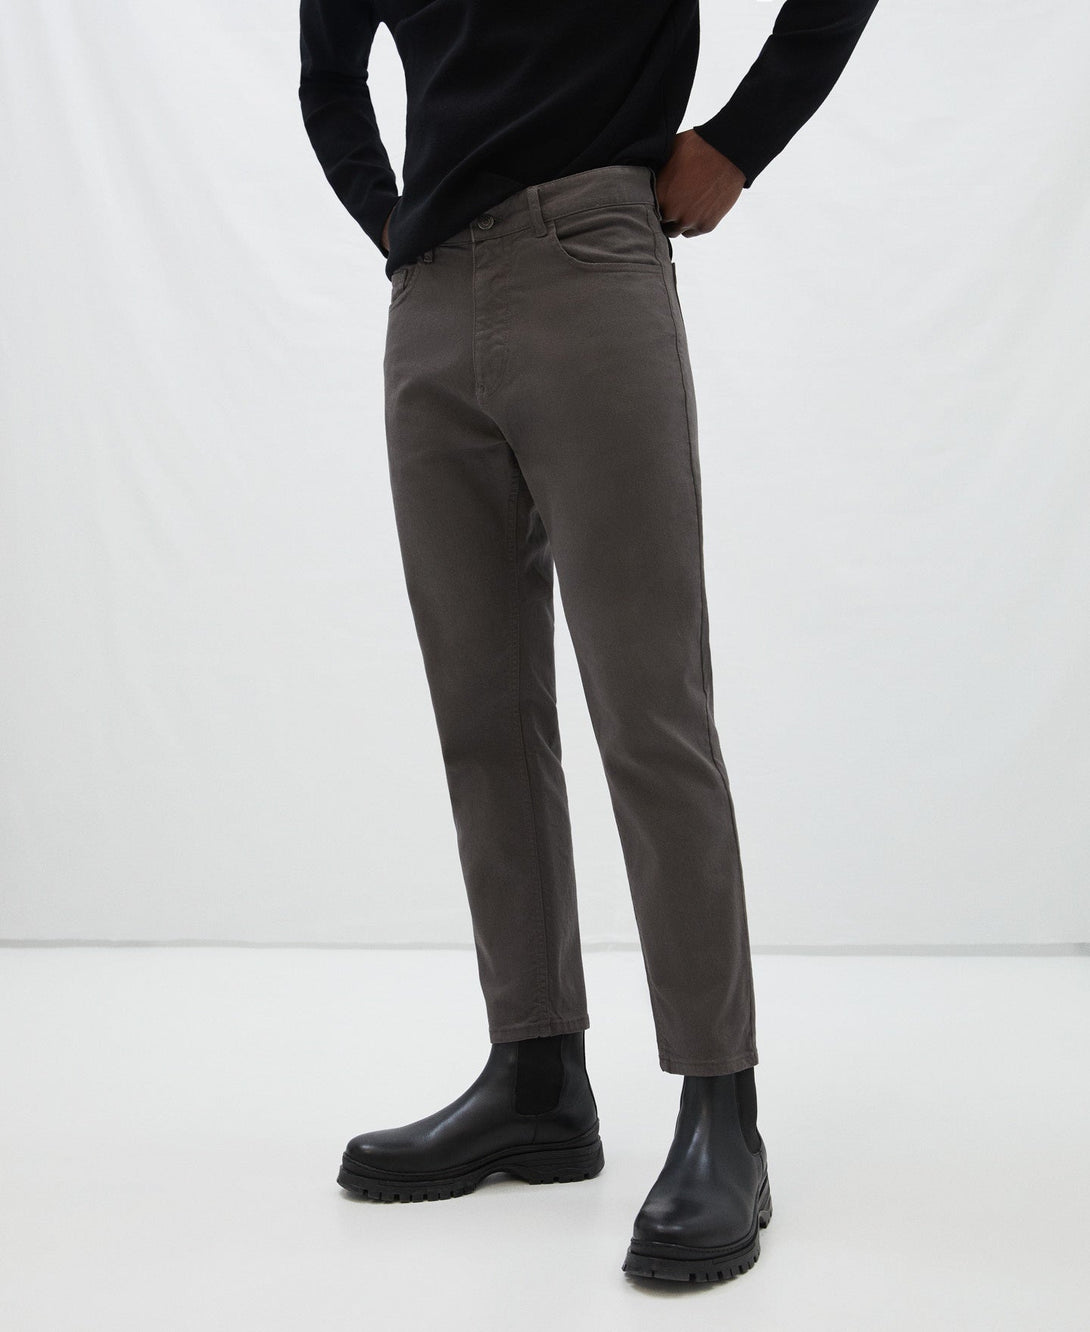 Men Jeans | Grey Five-Pocket Jeans by Spanish designer Adolfo Dominguez